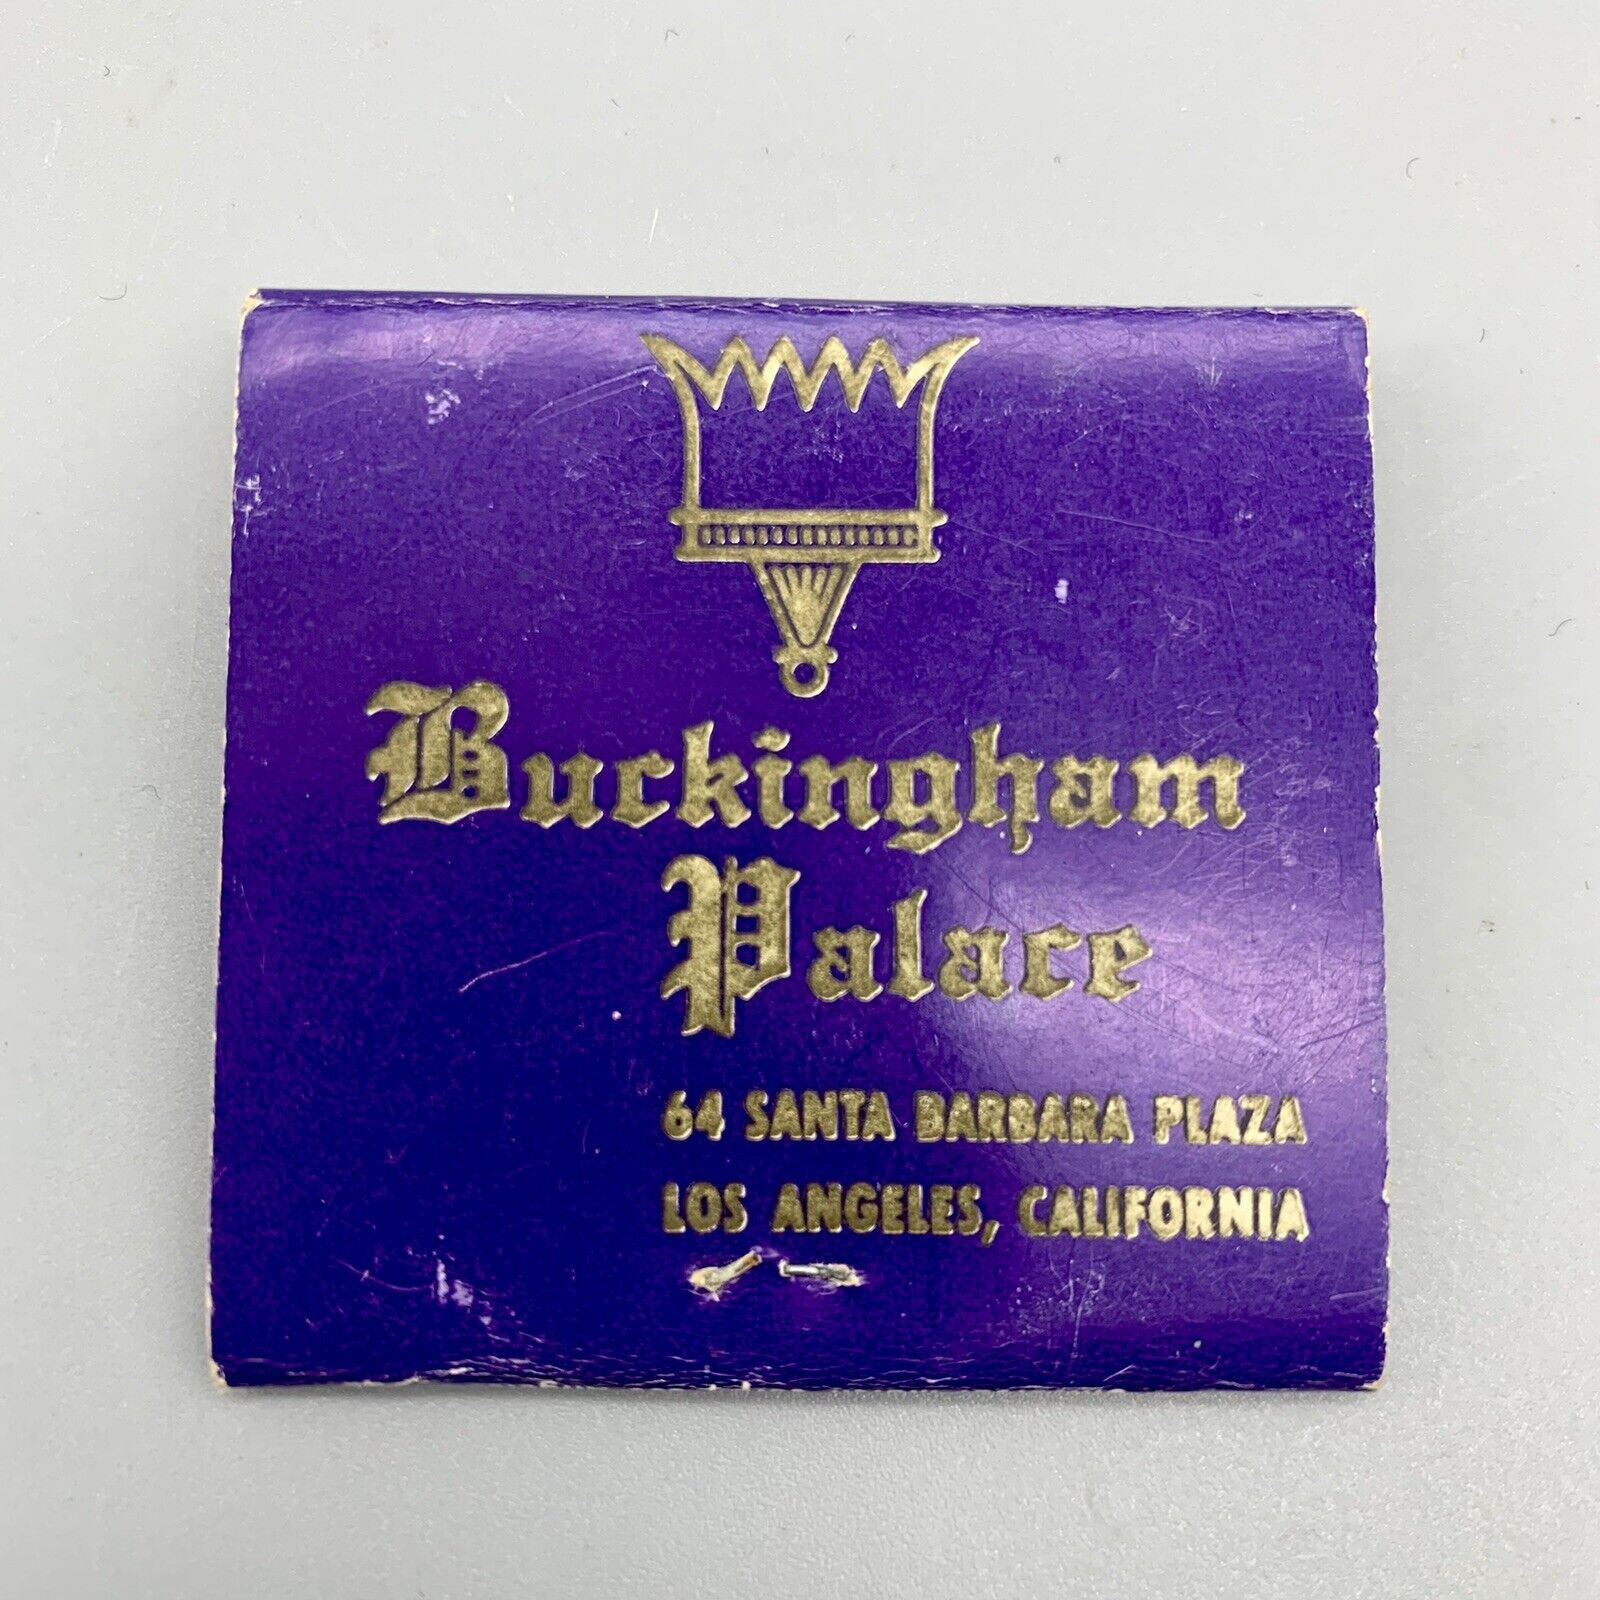 VTG Purple Matchbook Buckingham Palace Restaurant Santa Barbara Plaza LA Calif.